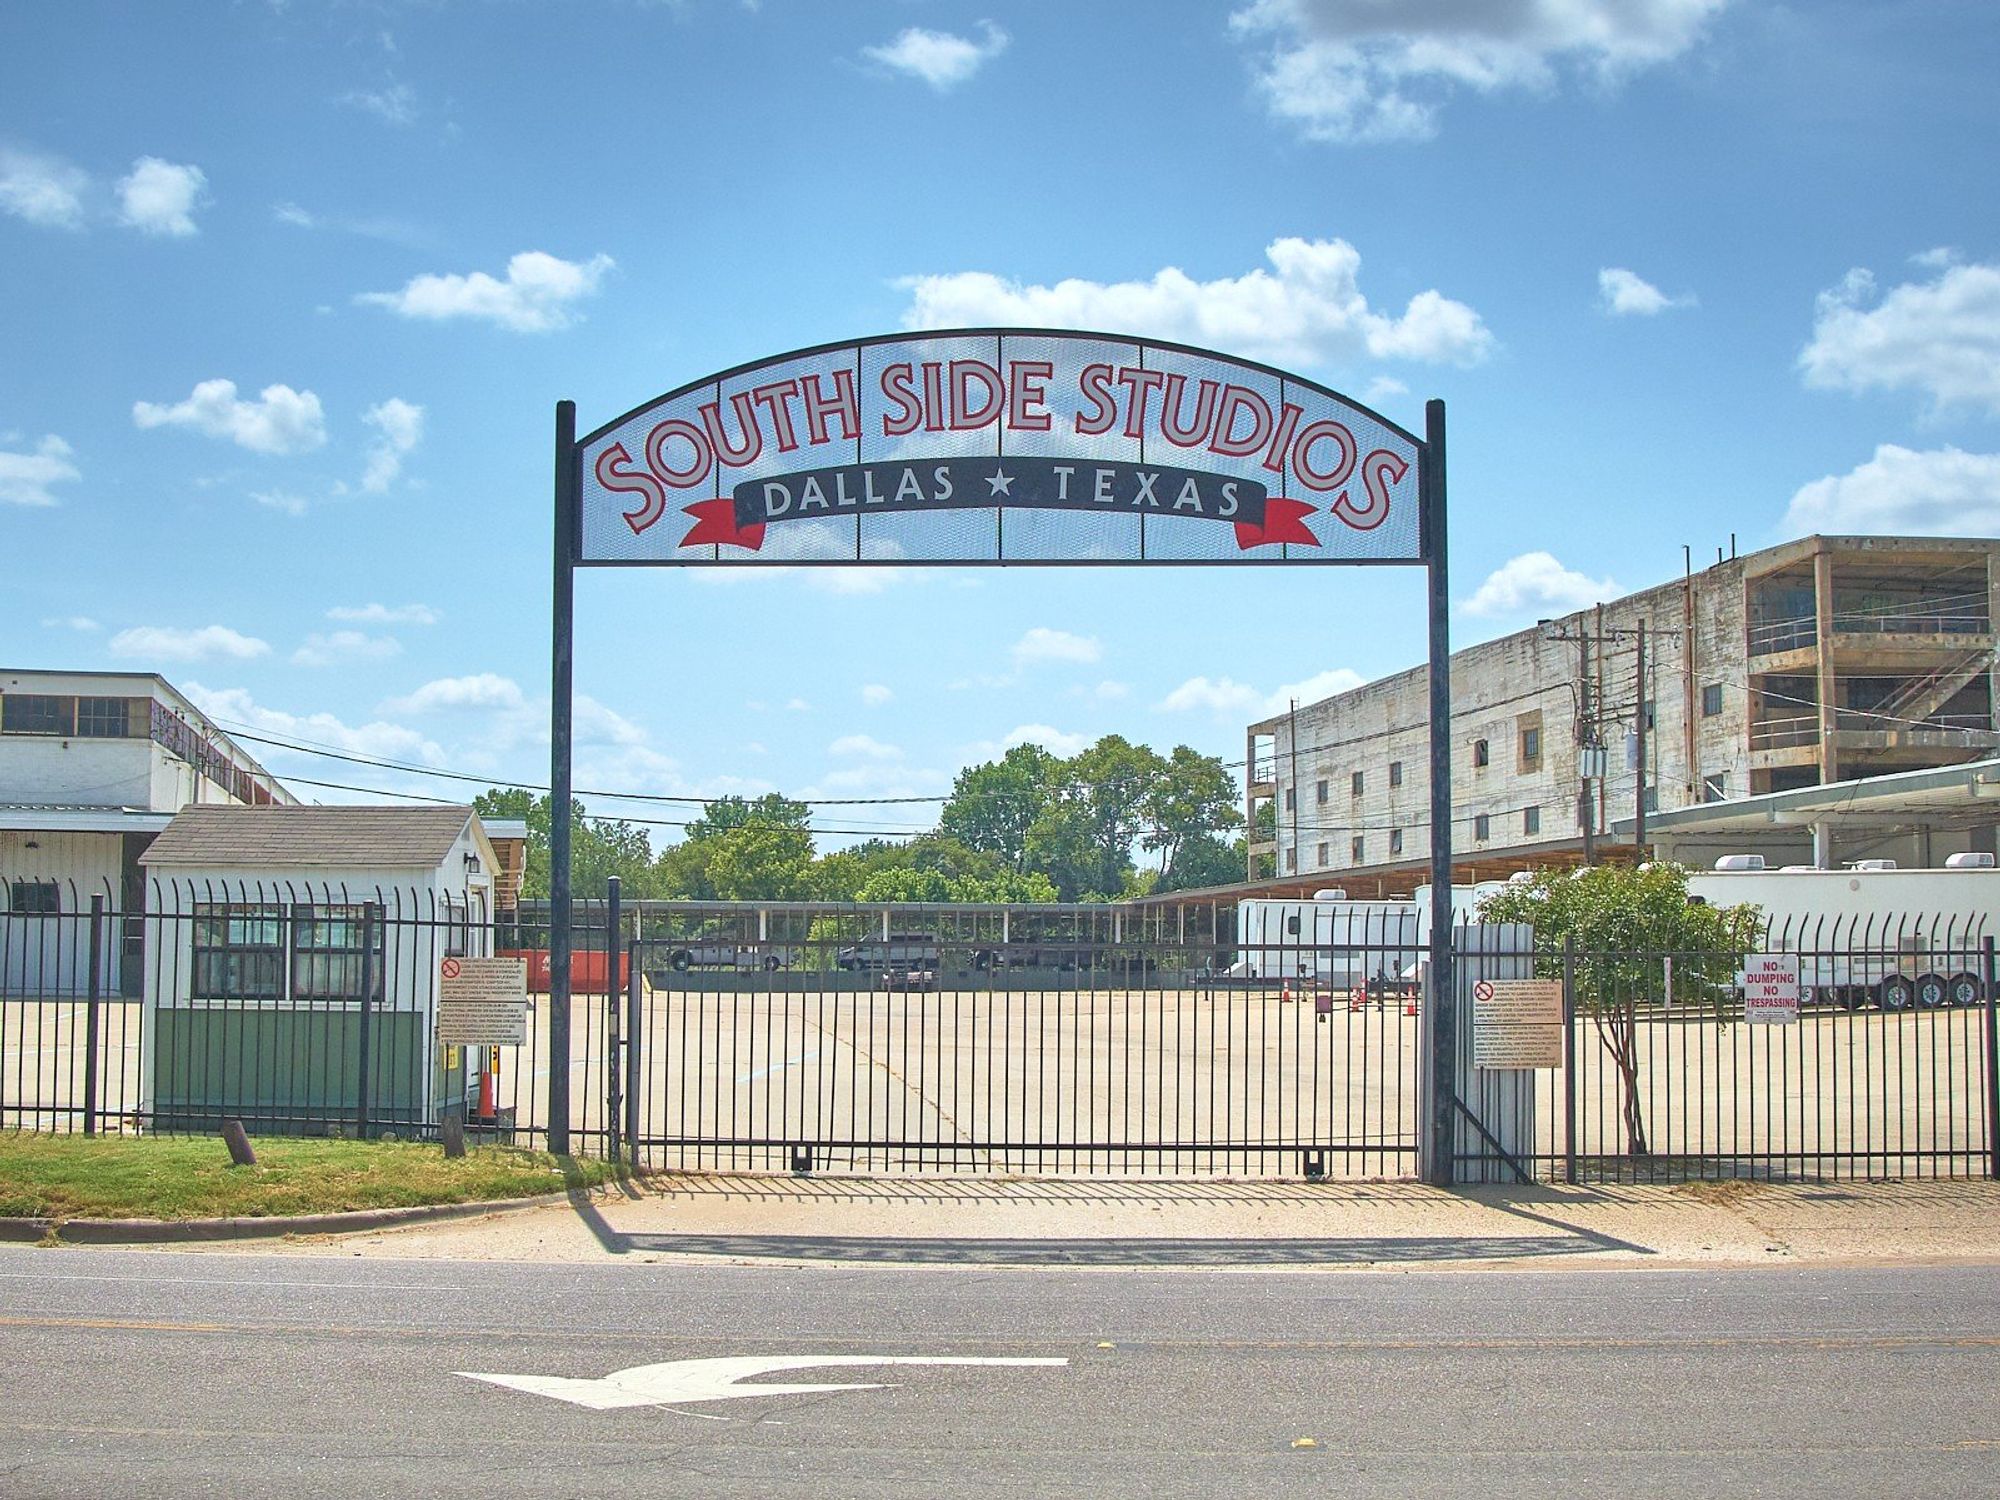 South Side Studios in Dallas